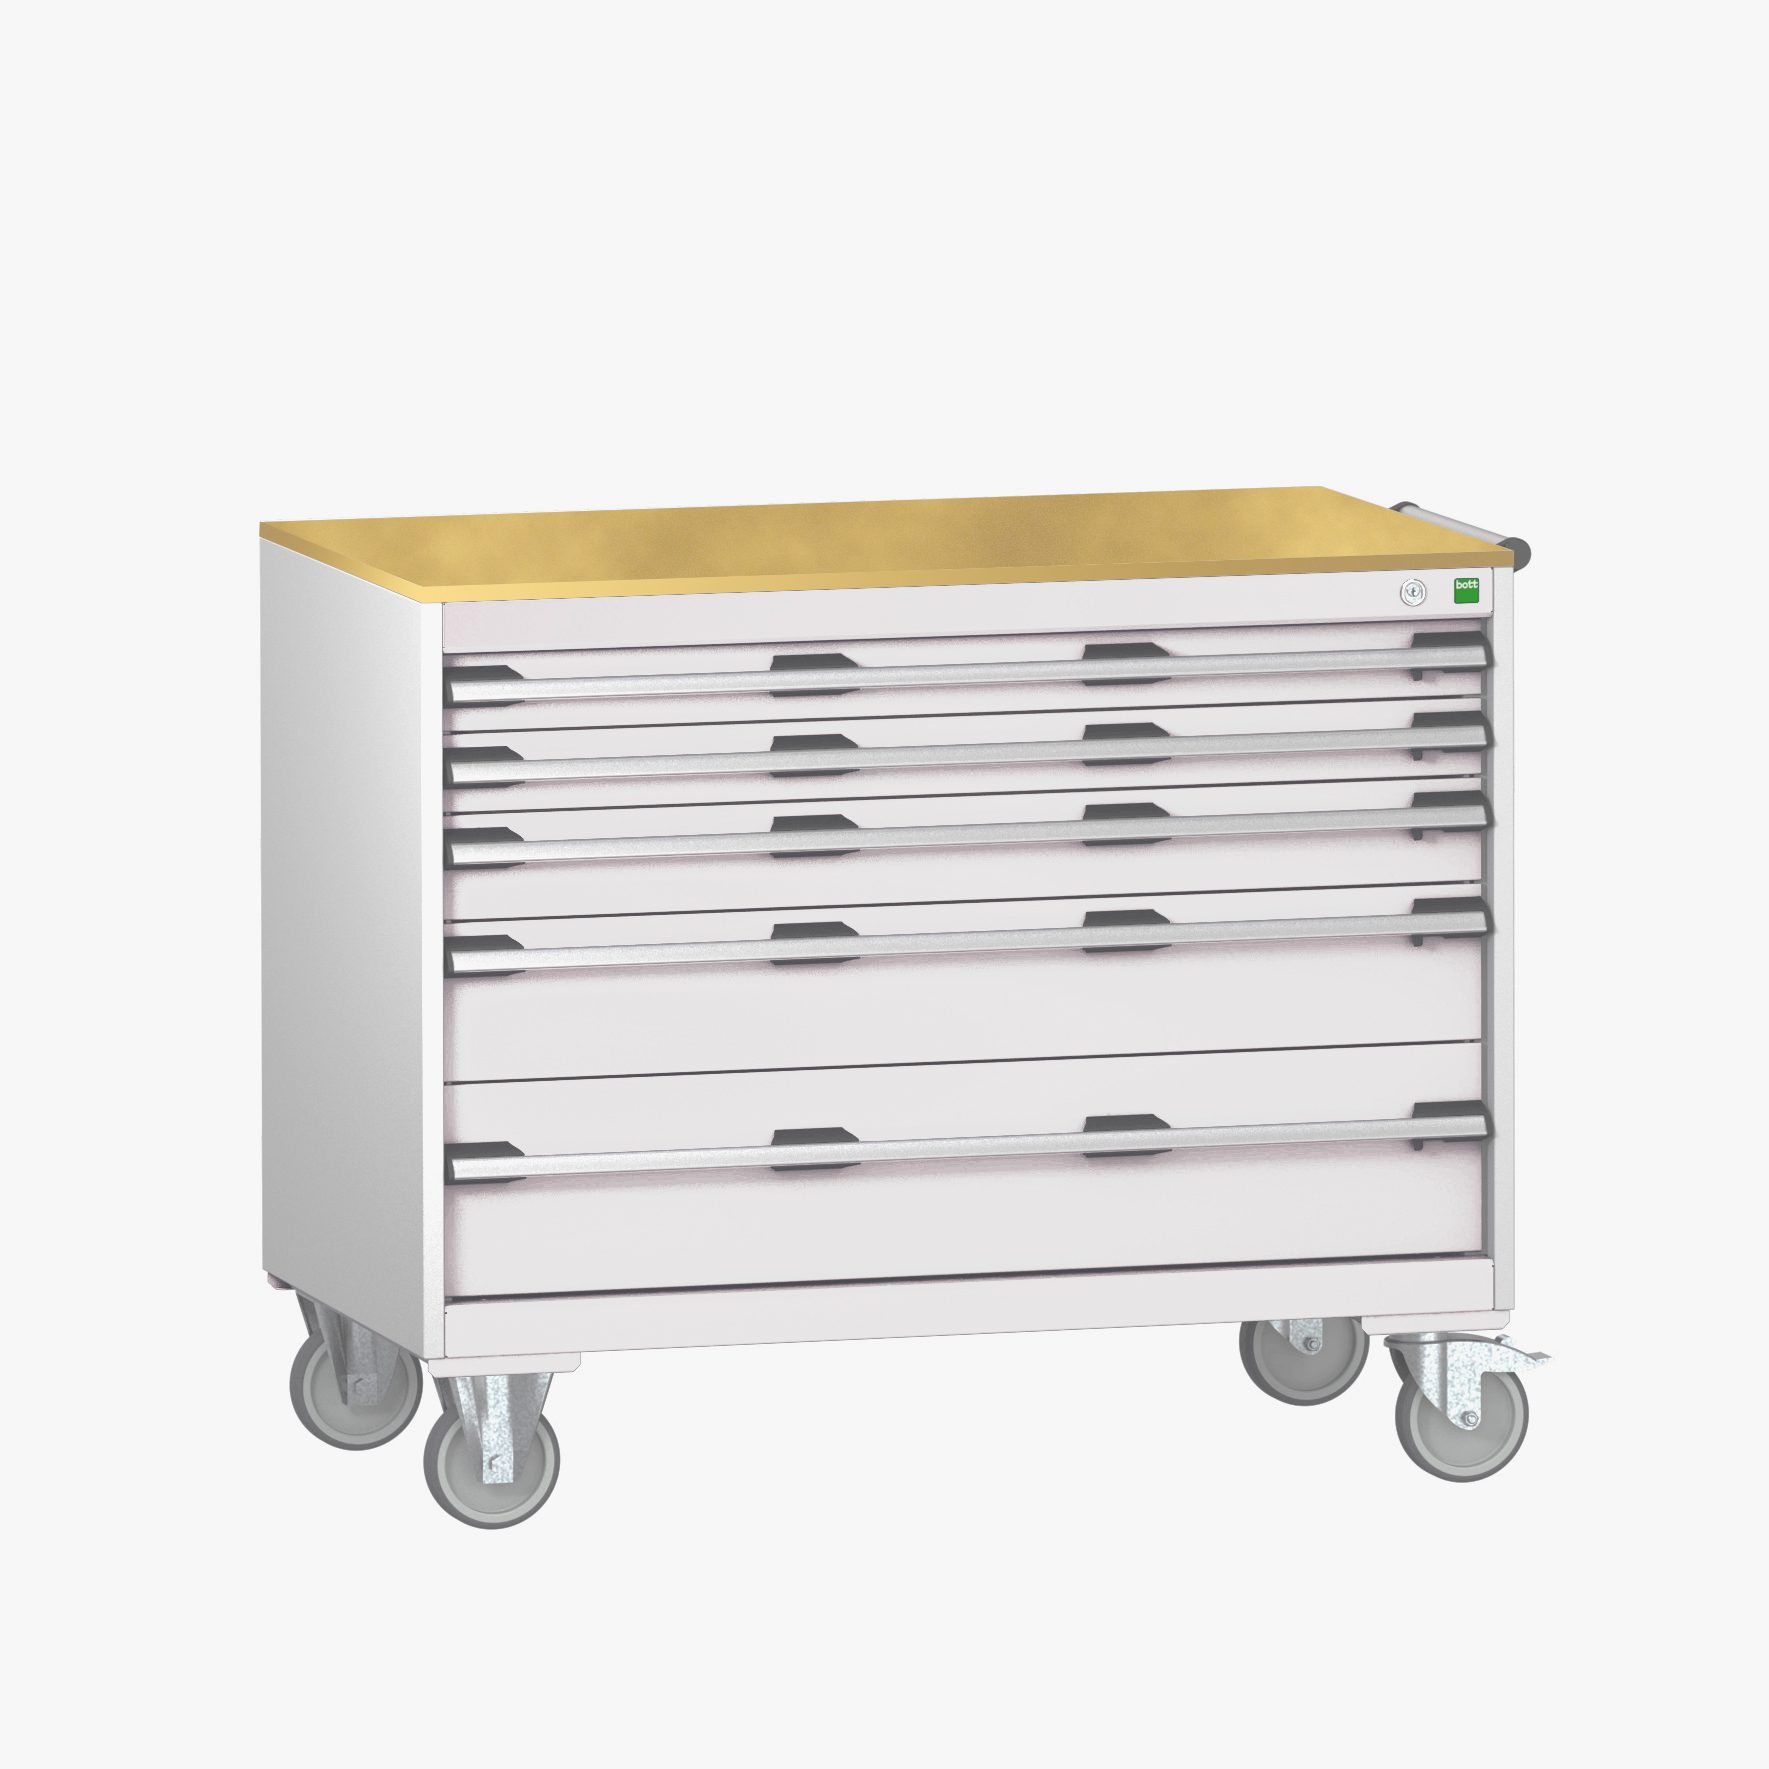 Bott Cubio Mobile Drawer Cabinet With 5 Drawers & Multiplex Worktop - 40402163.16V